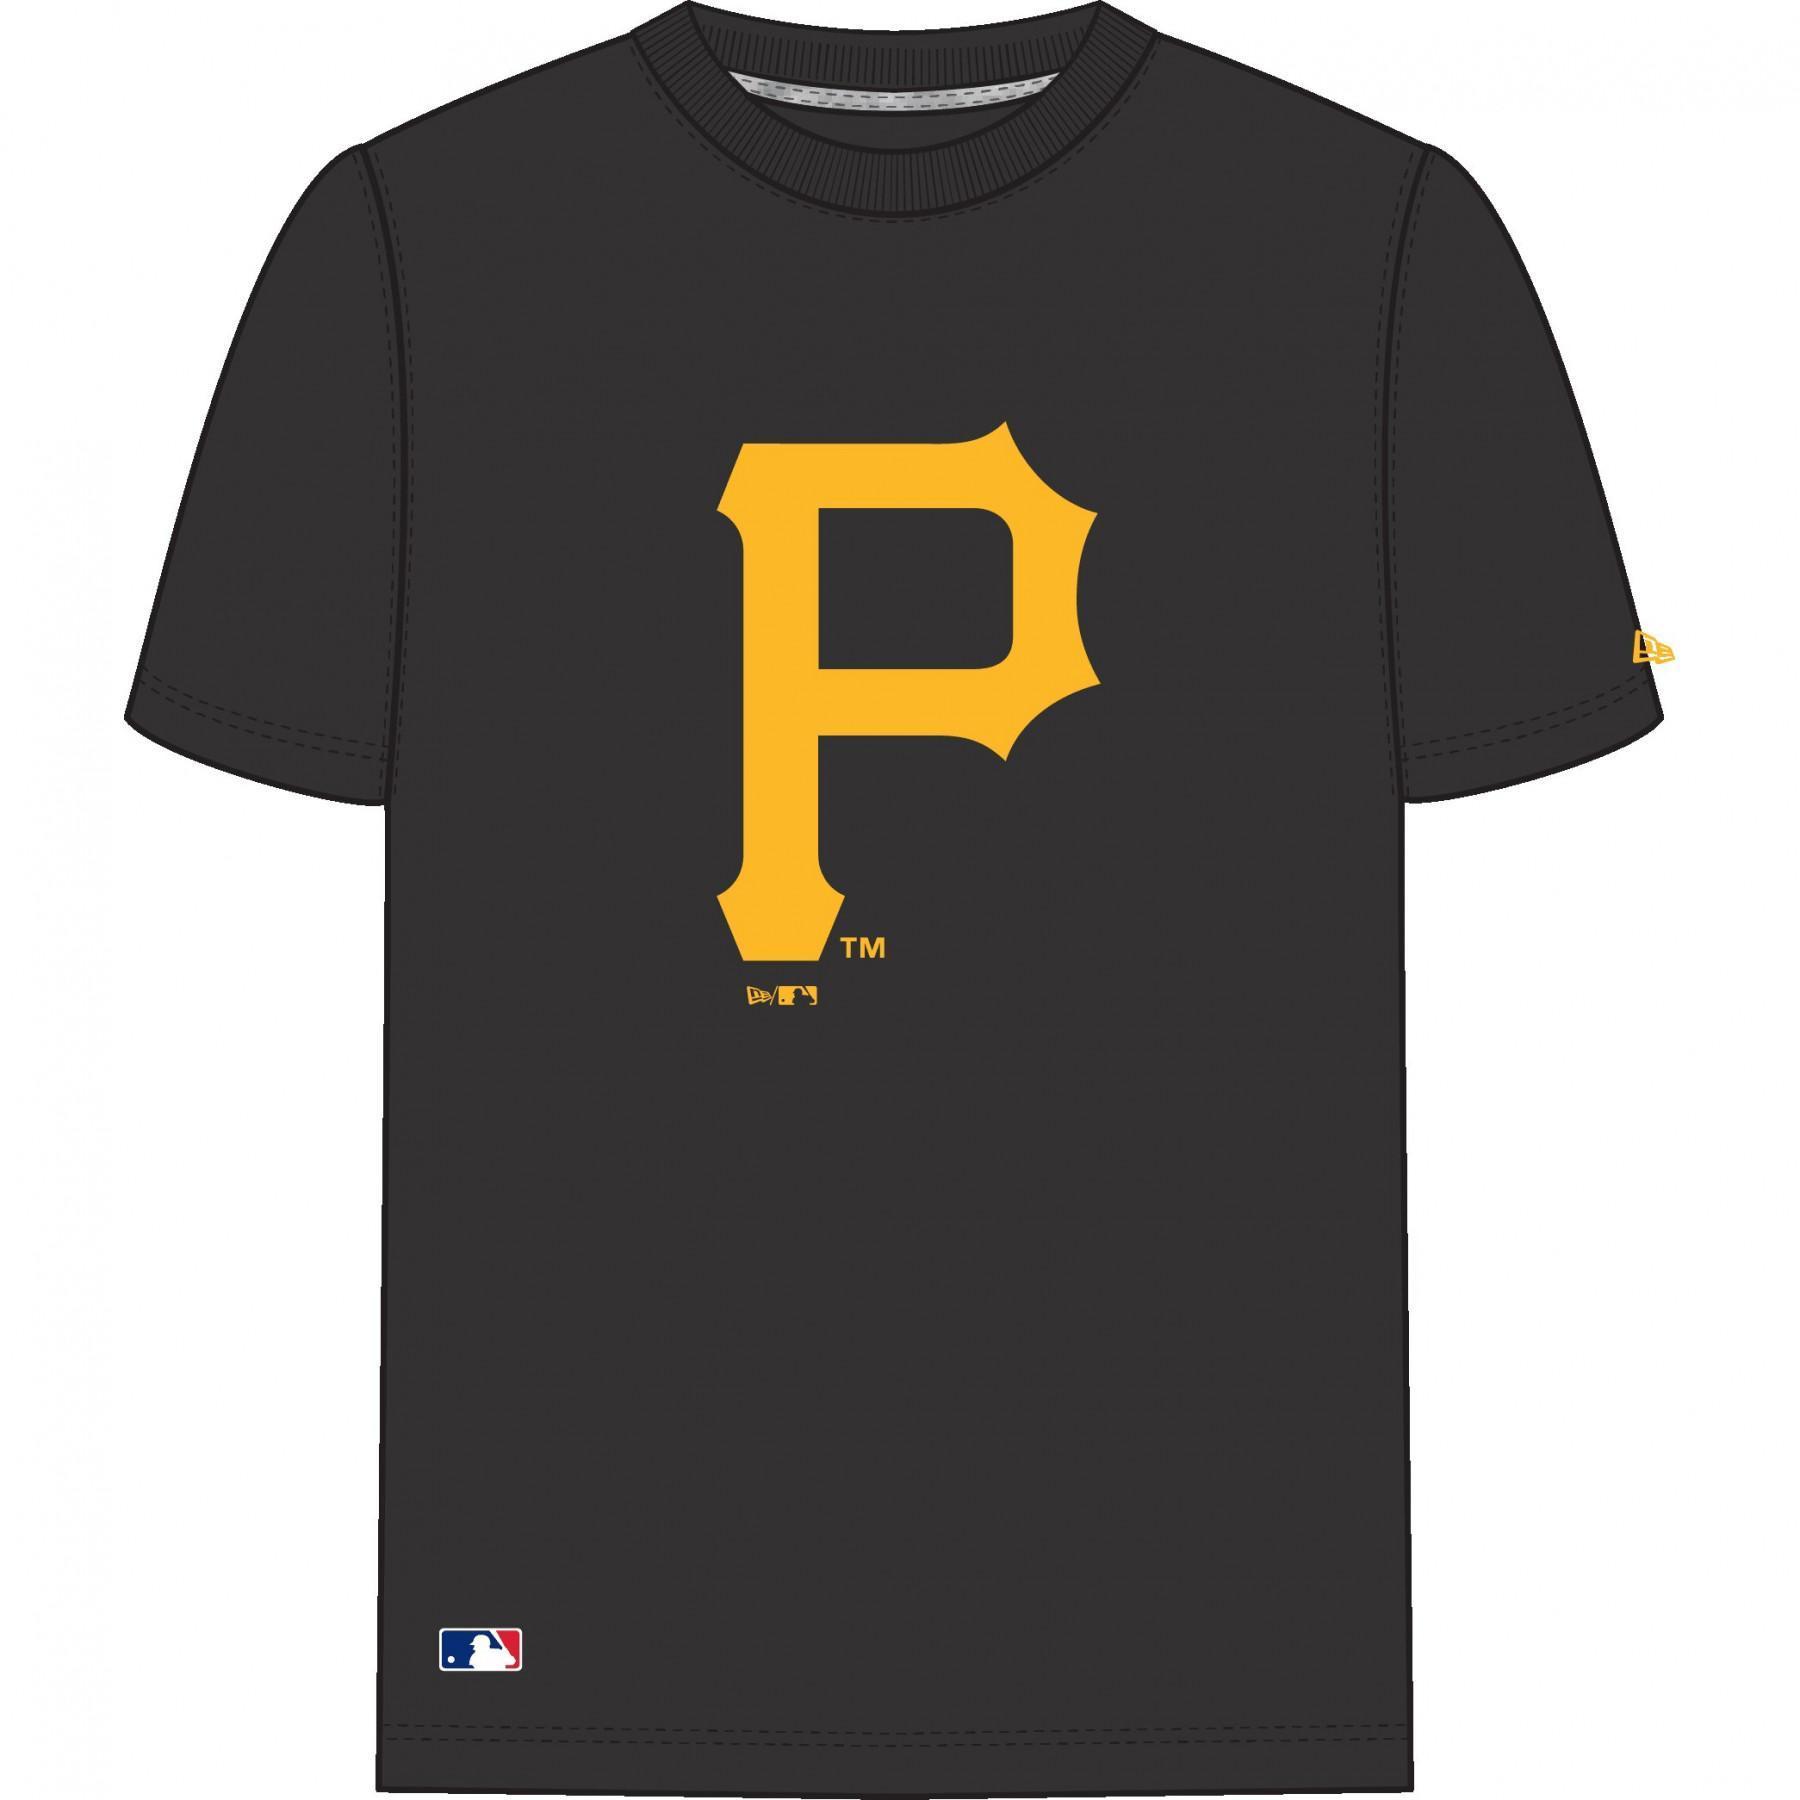 Maglietta New Era Pittsburgh Pirates logo